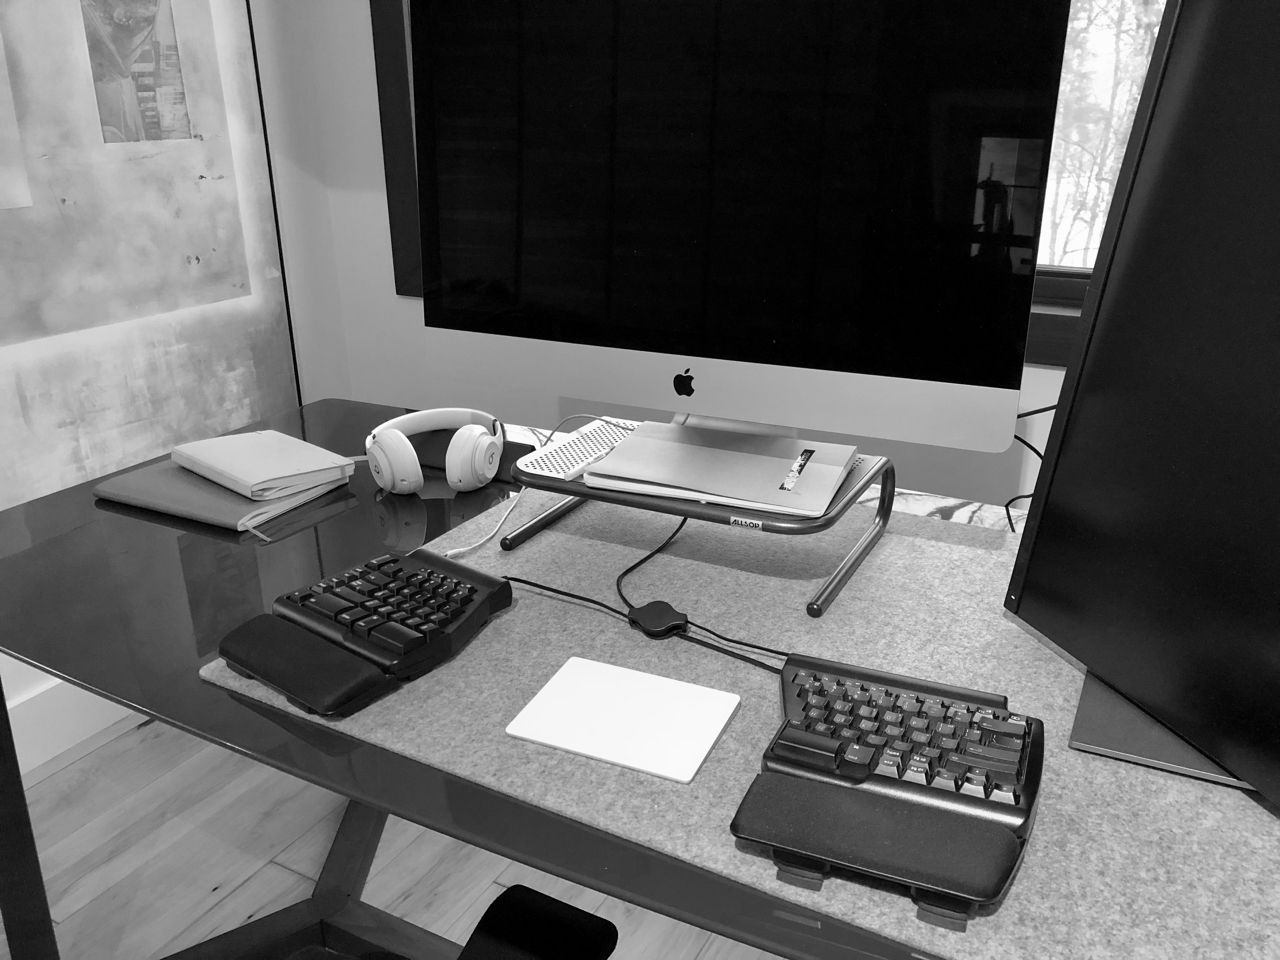 Photo of my desk setup